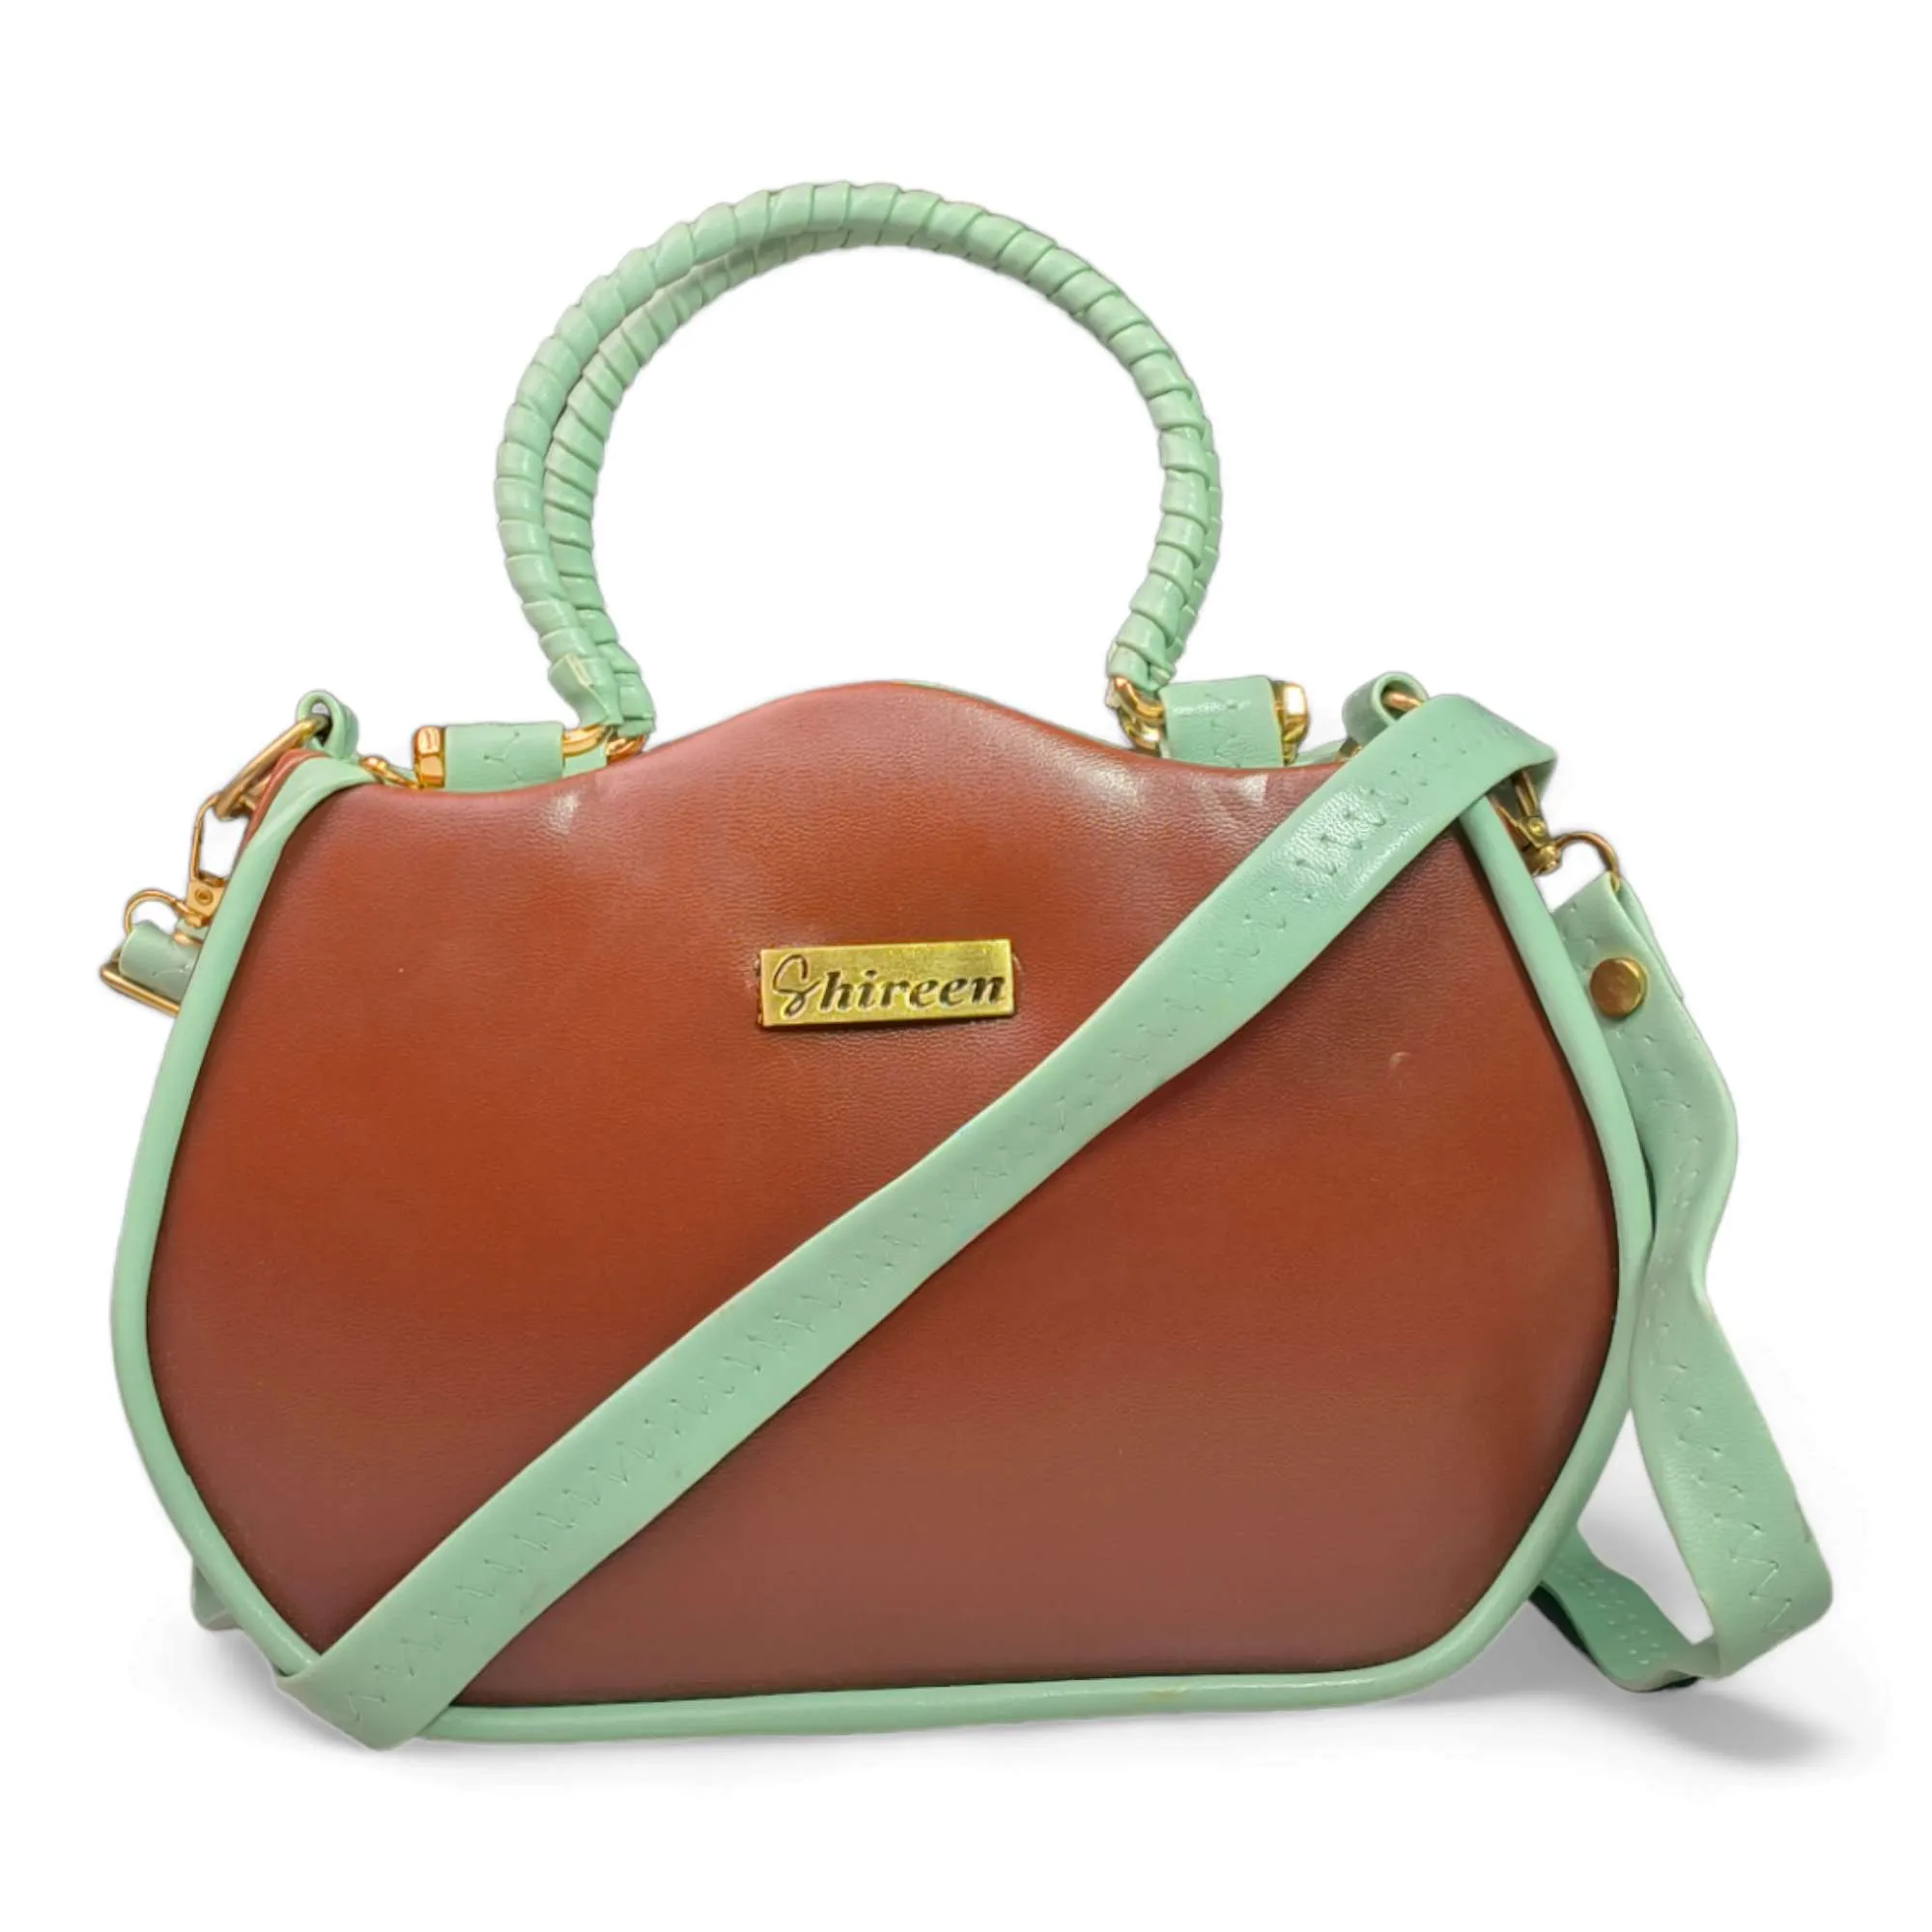 TOVOSO Crossbody Bag for Women, Genuine Leather Multi-Pocket Purse with  Adjustable Strap, RFID Protection, Built-In Wallet, Medium, Black:  Handbags: Amazon.com